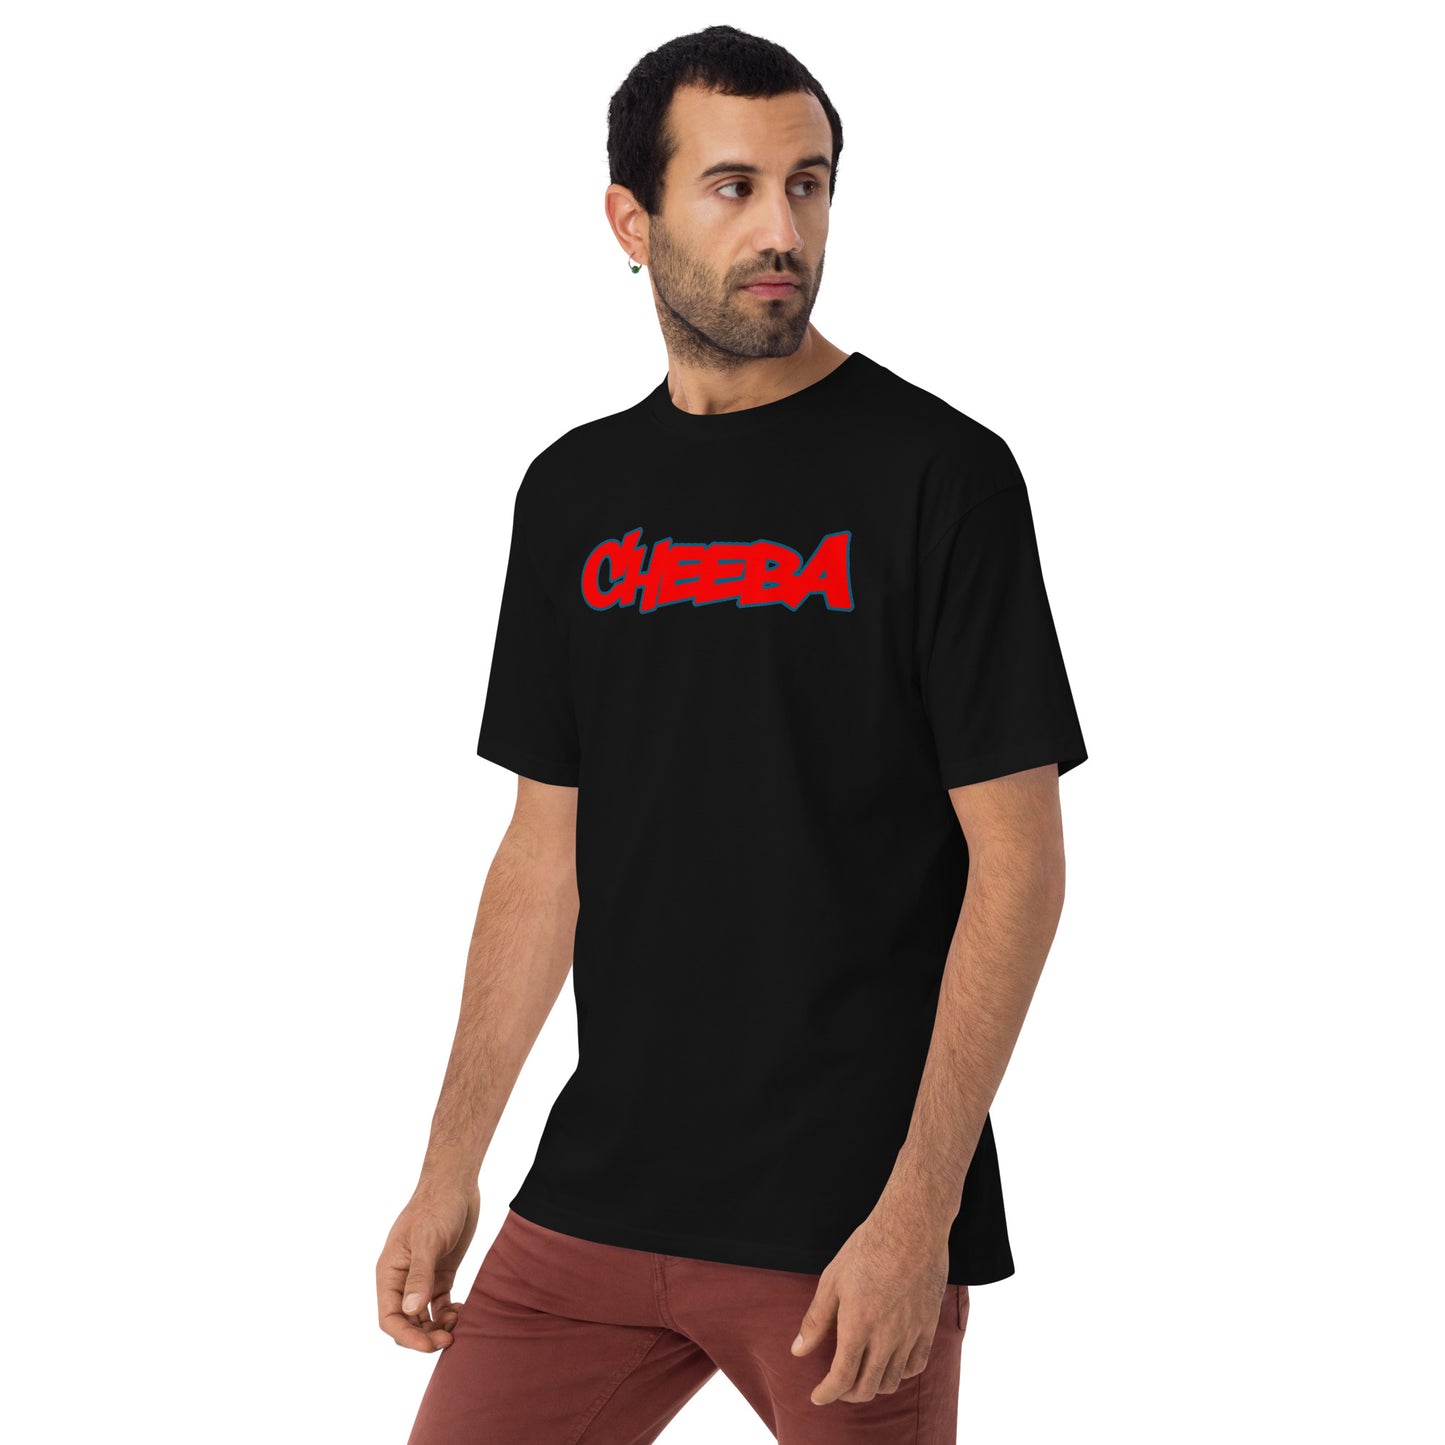 Cheeba Edition Tee shirt